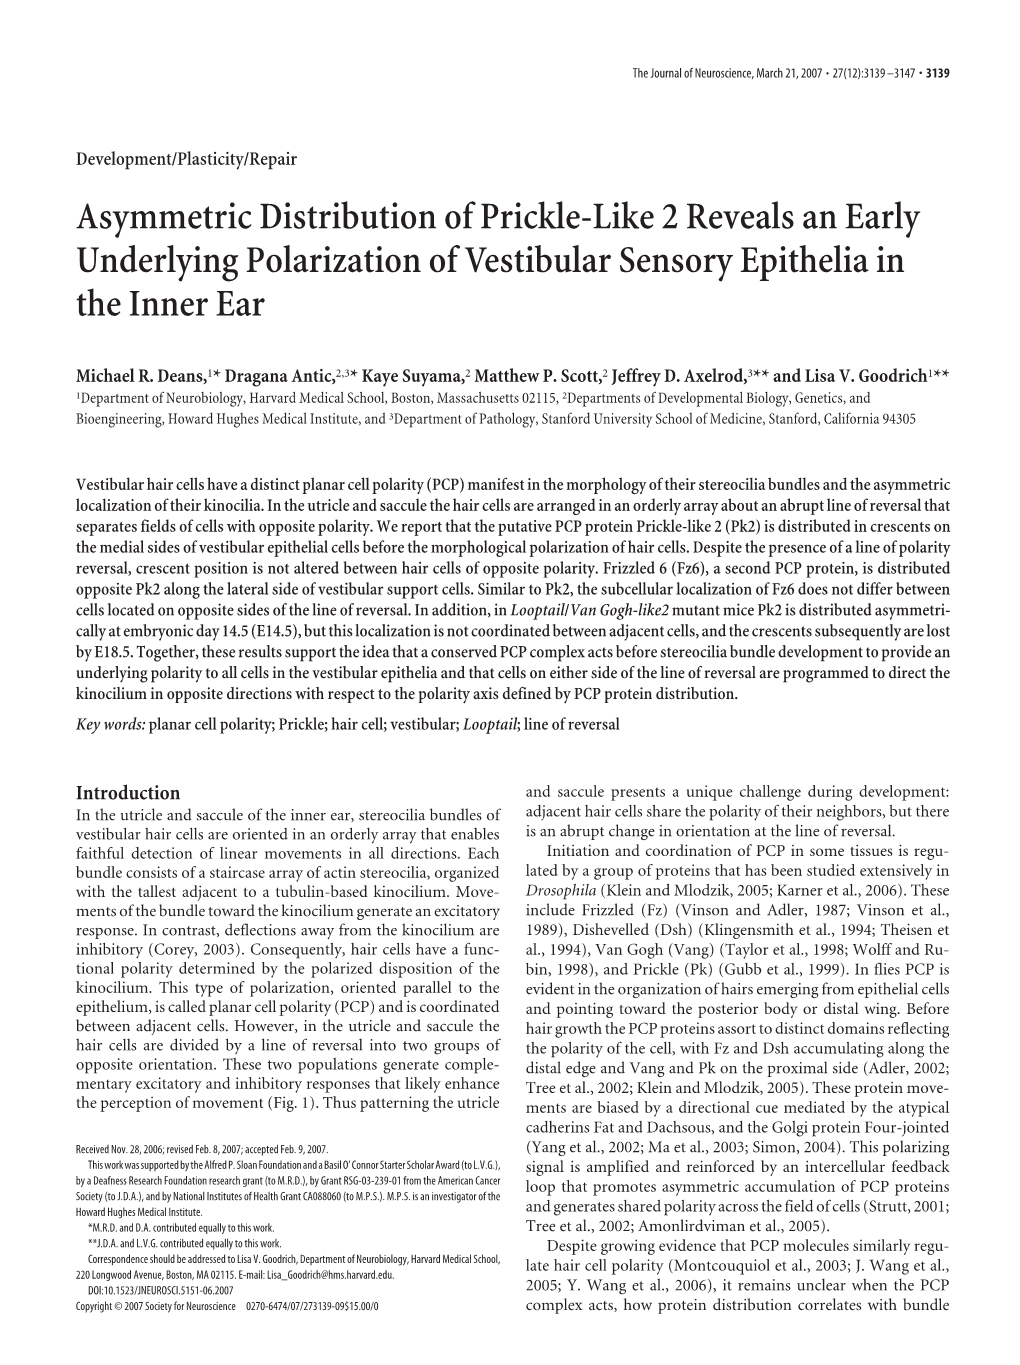 Asymmetric Distribution of Prickle-Like 2 Reveals an Early Underlying Polarization of Vestibular Sensory Epithelia in the Inner Ear